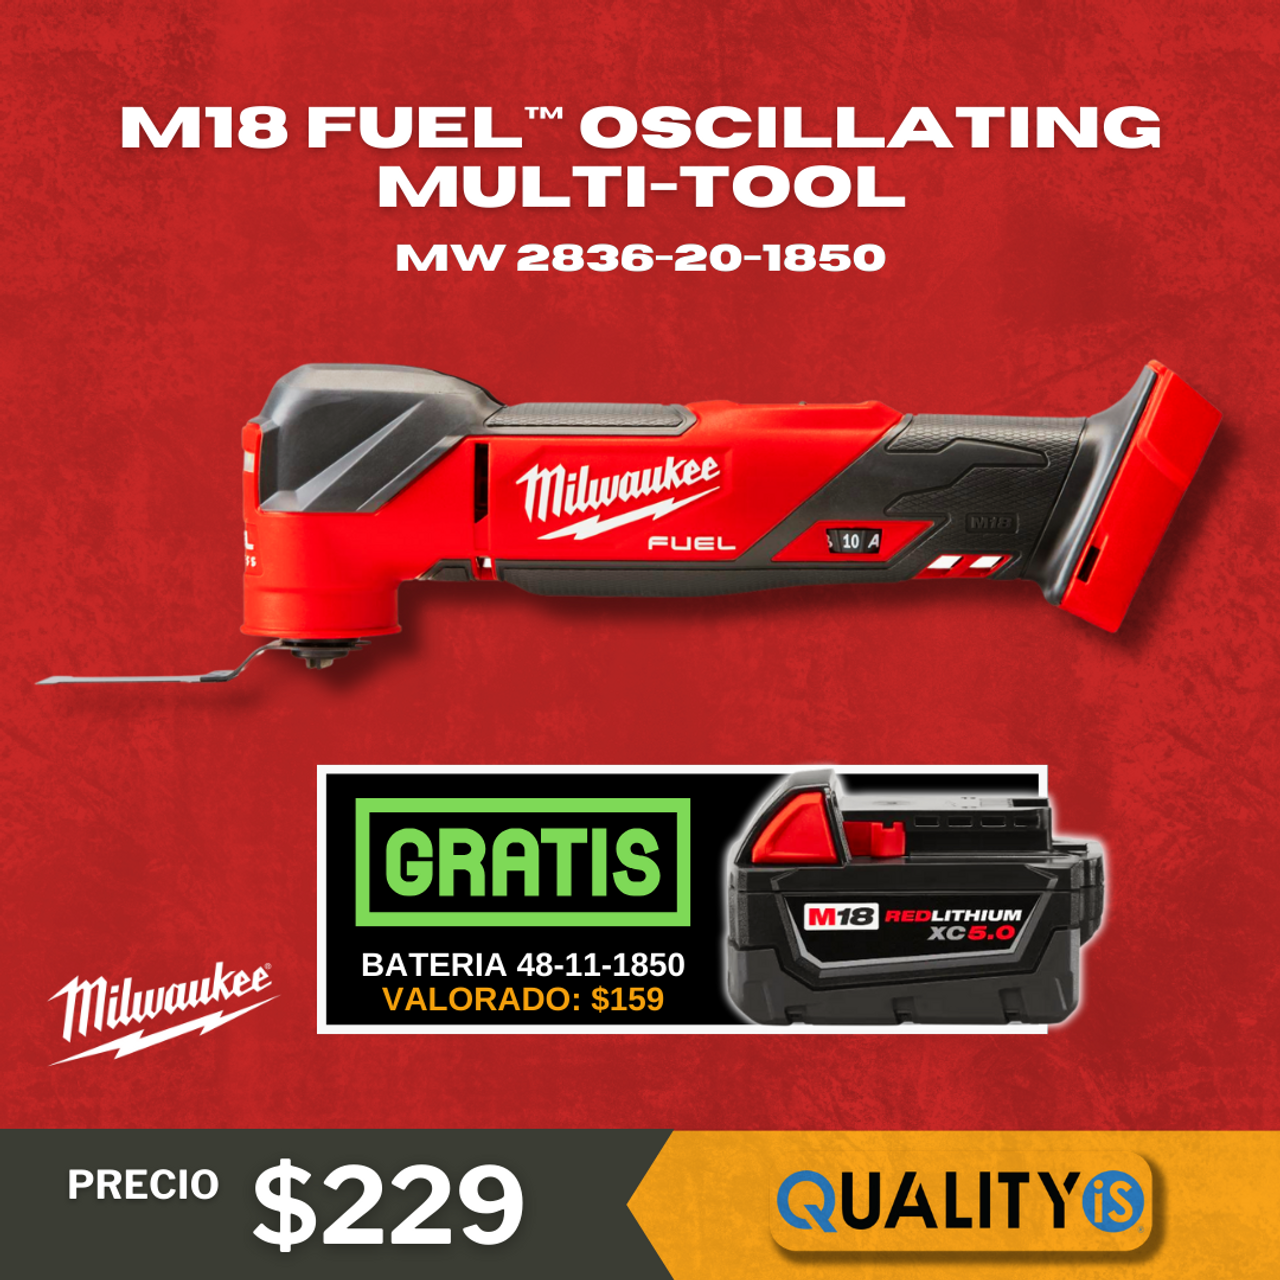 M18 FUEL™ Oscillating Multi-Tool/free battery xc5.0